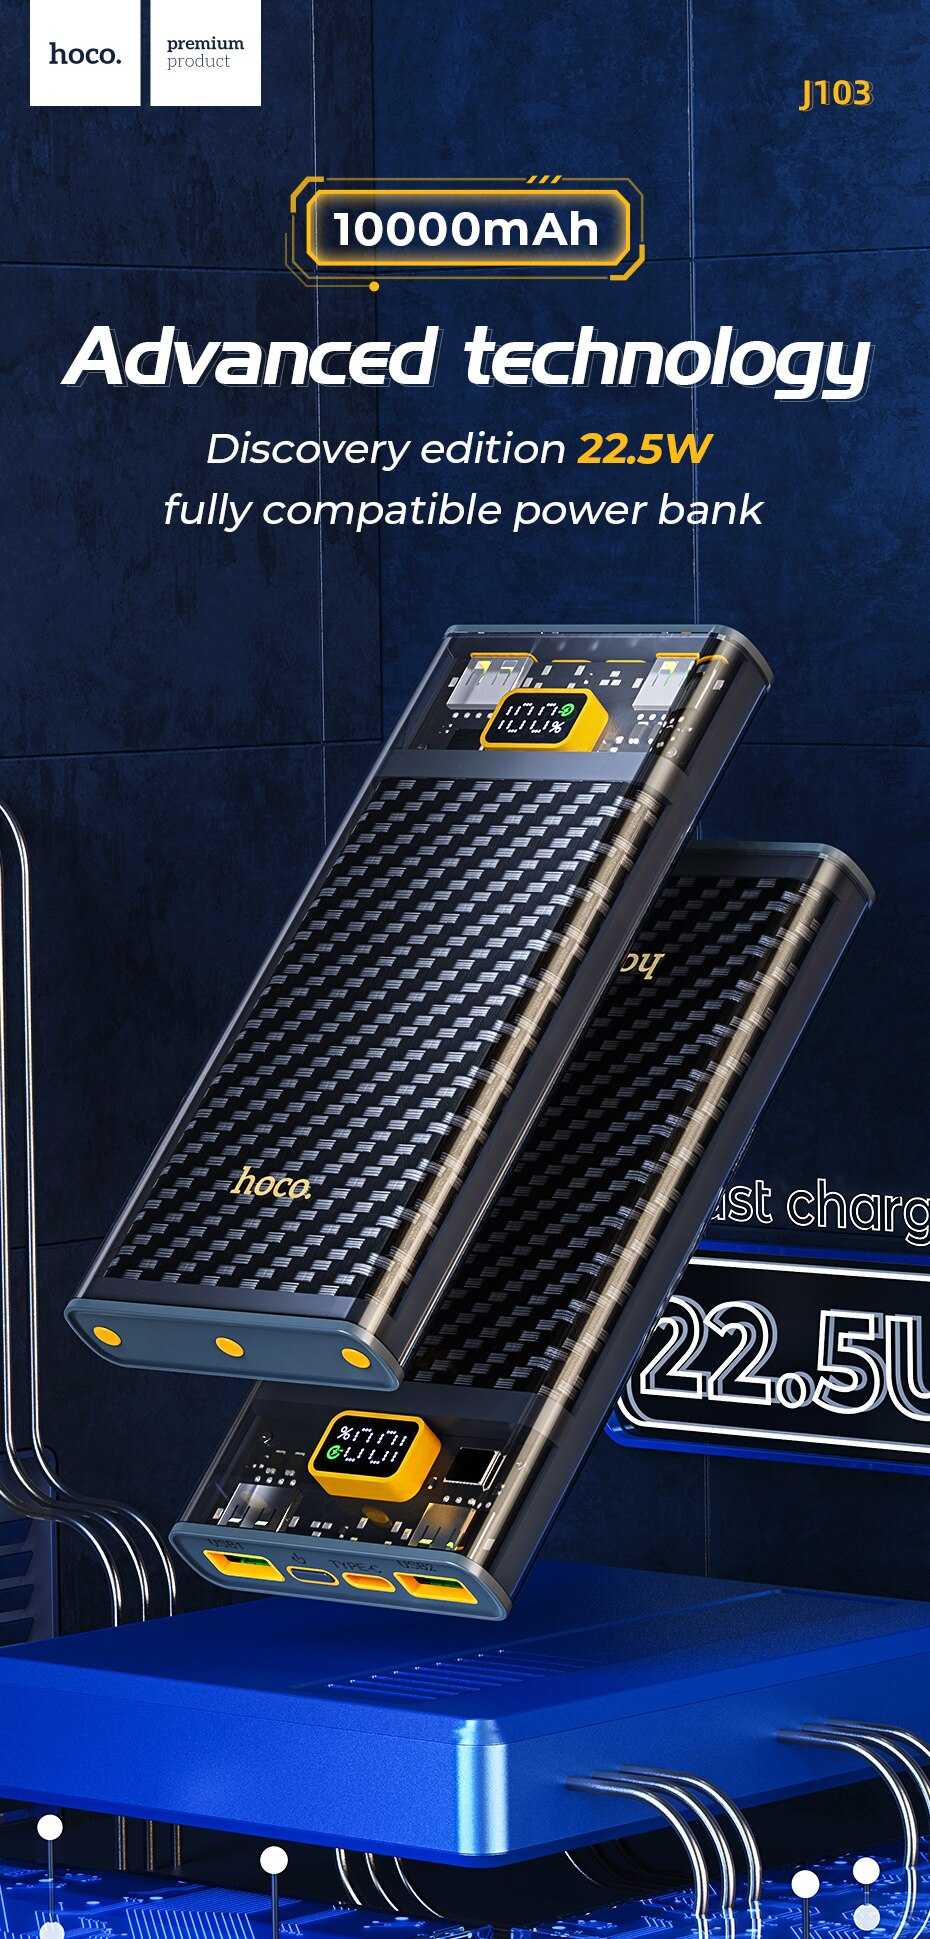 Hoco J103 22.5W 10000mAh Discovery Edition Power Bank